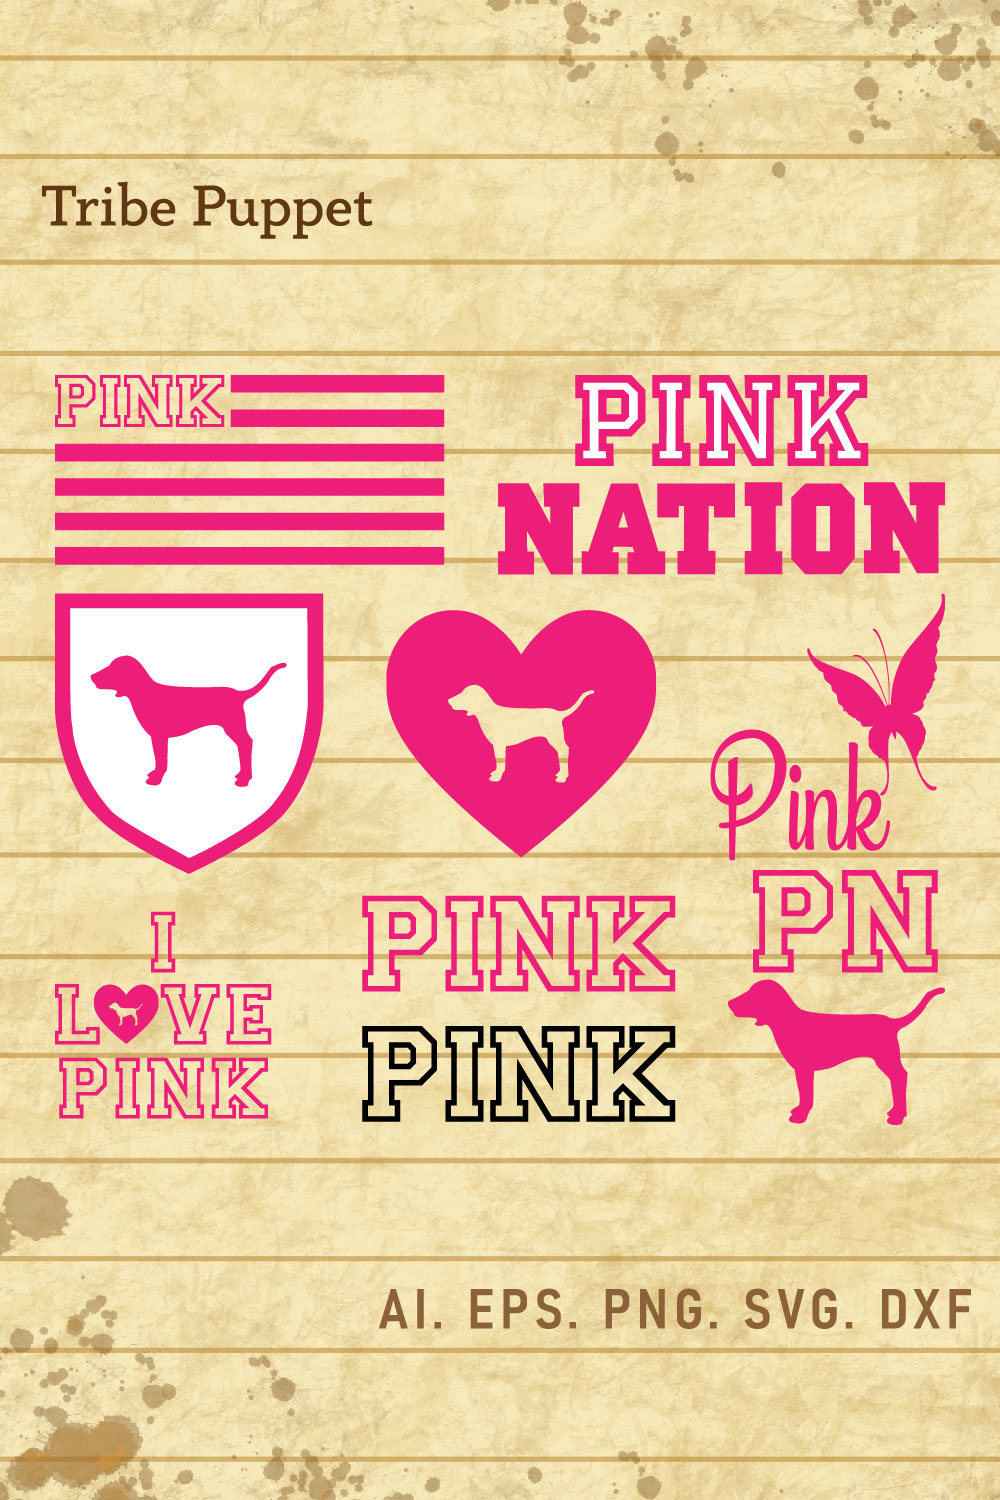 Pink Nation SVG pinterest preview image.